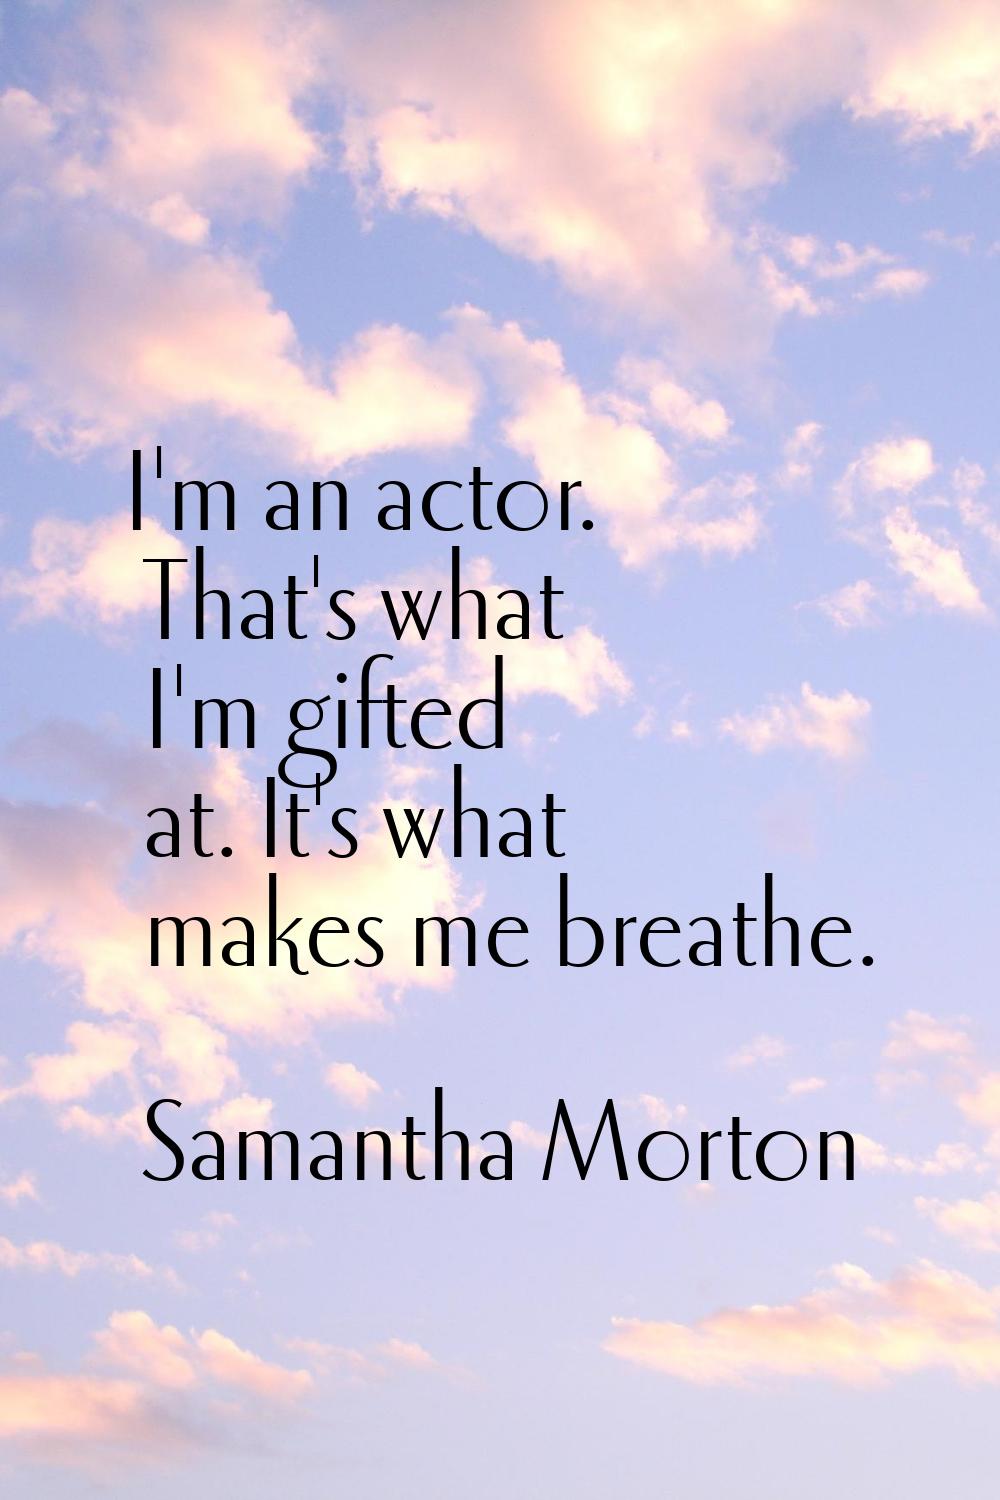 I'm an actor. That's what I'm gifted at. It's what makes me breathe.